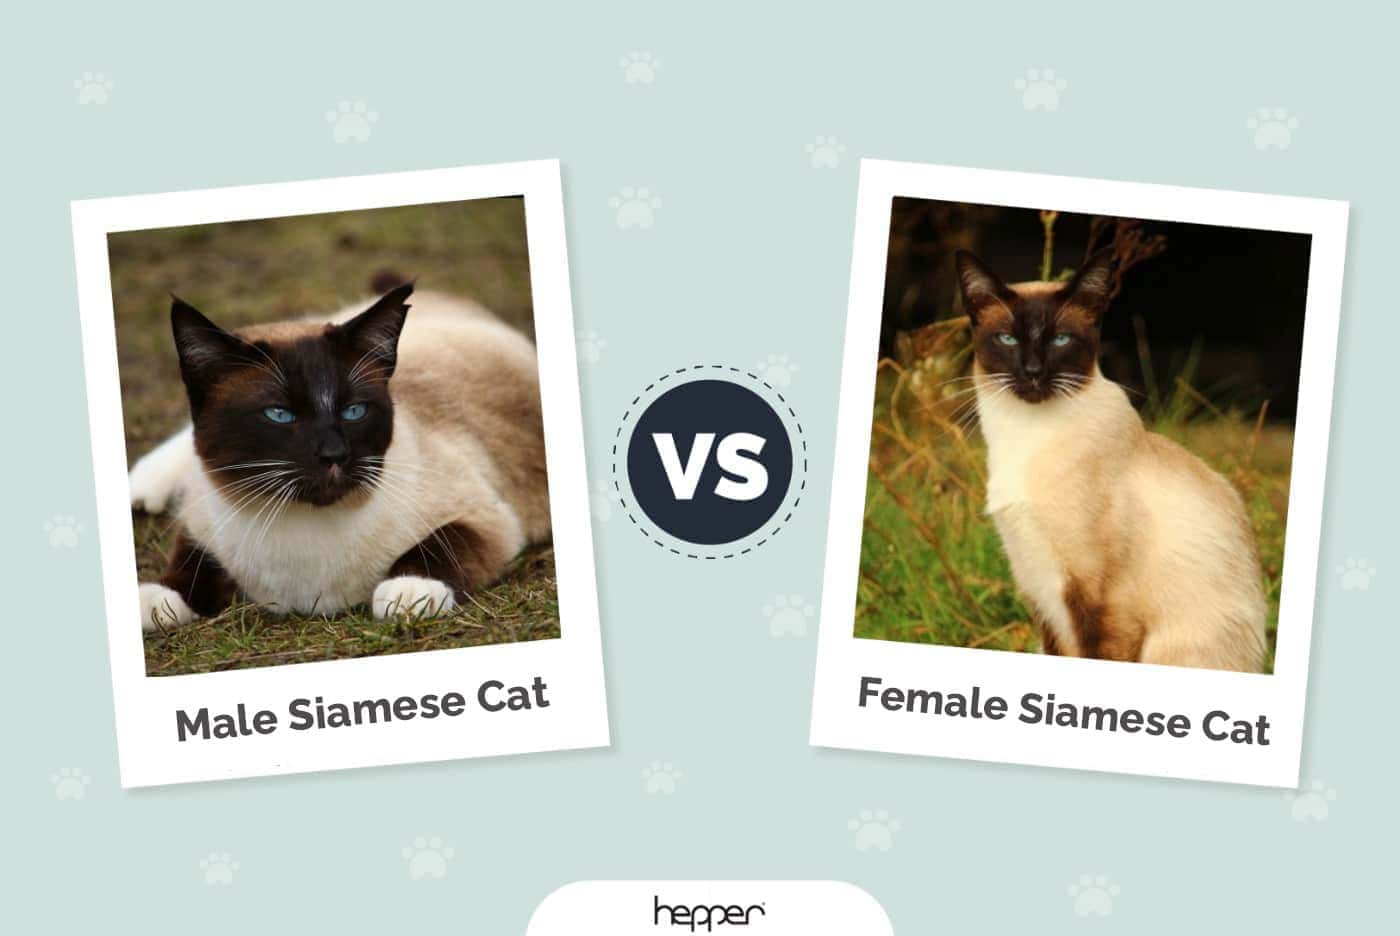 Gato siamés macho: rihaij_Pixabay | Derecha: Gato siamés hembra: rihaij , Pixabay